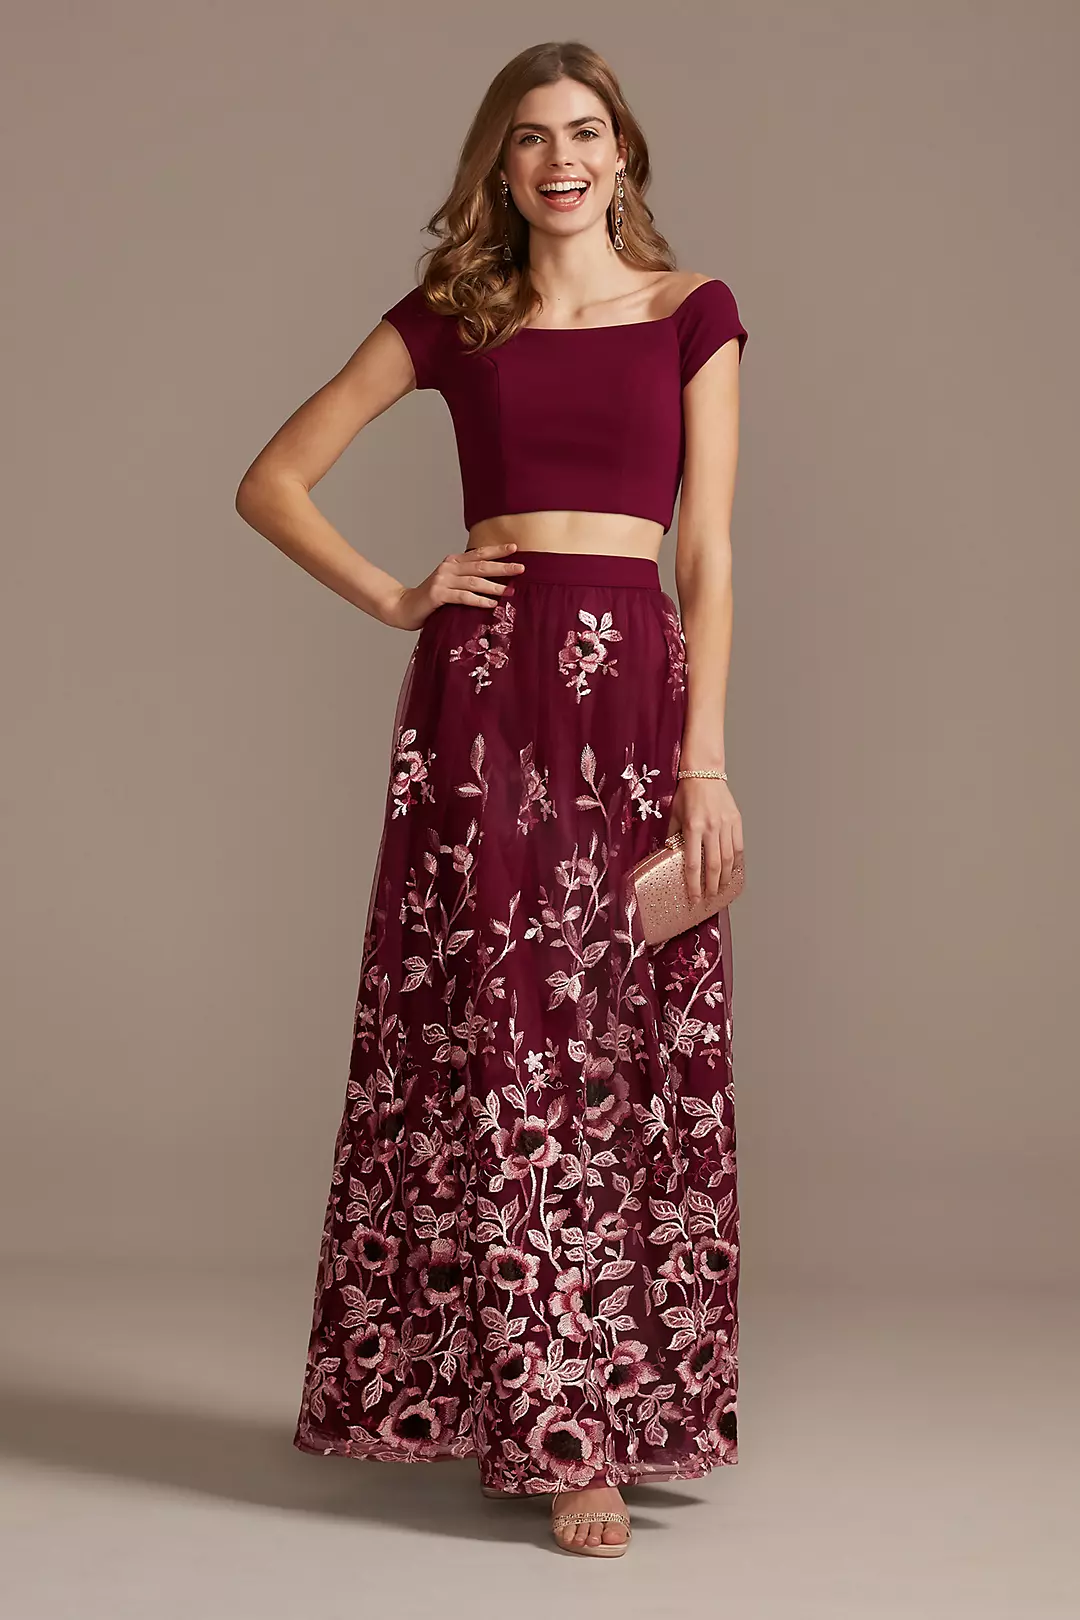 Off the Shoulder Crop and Embroidered Skirt Set Image